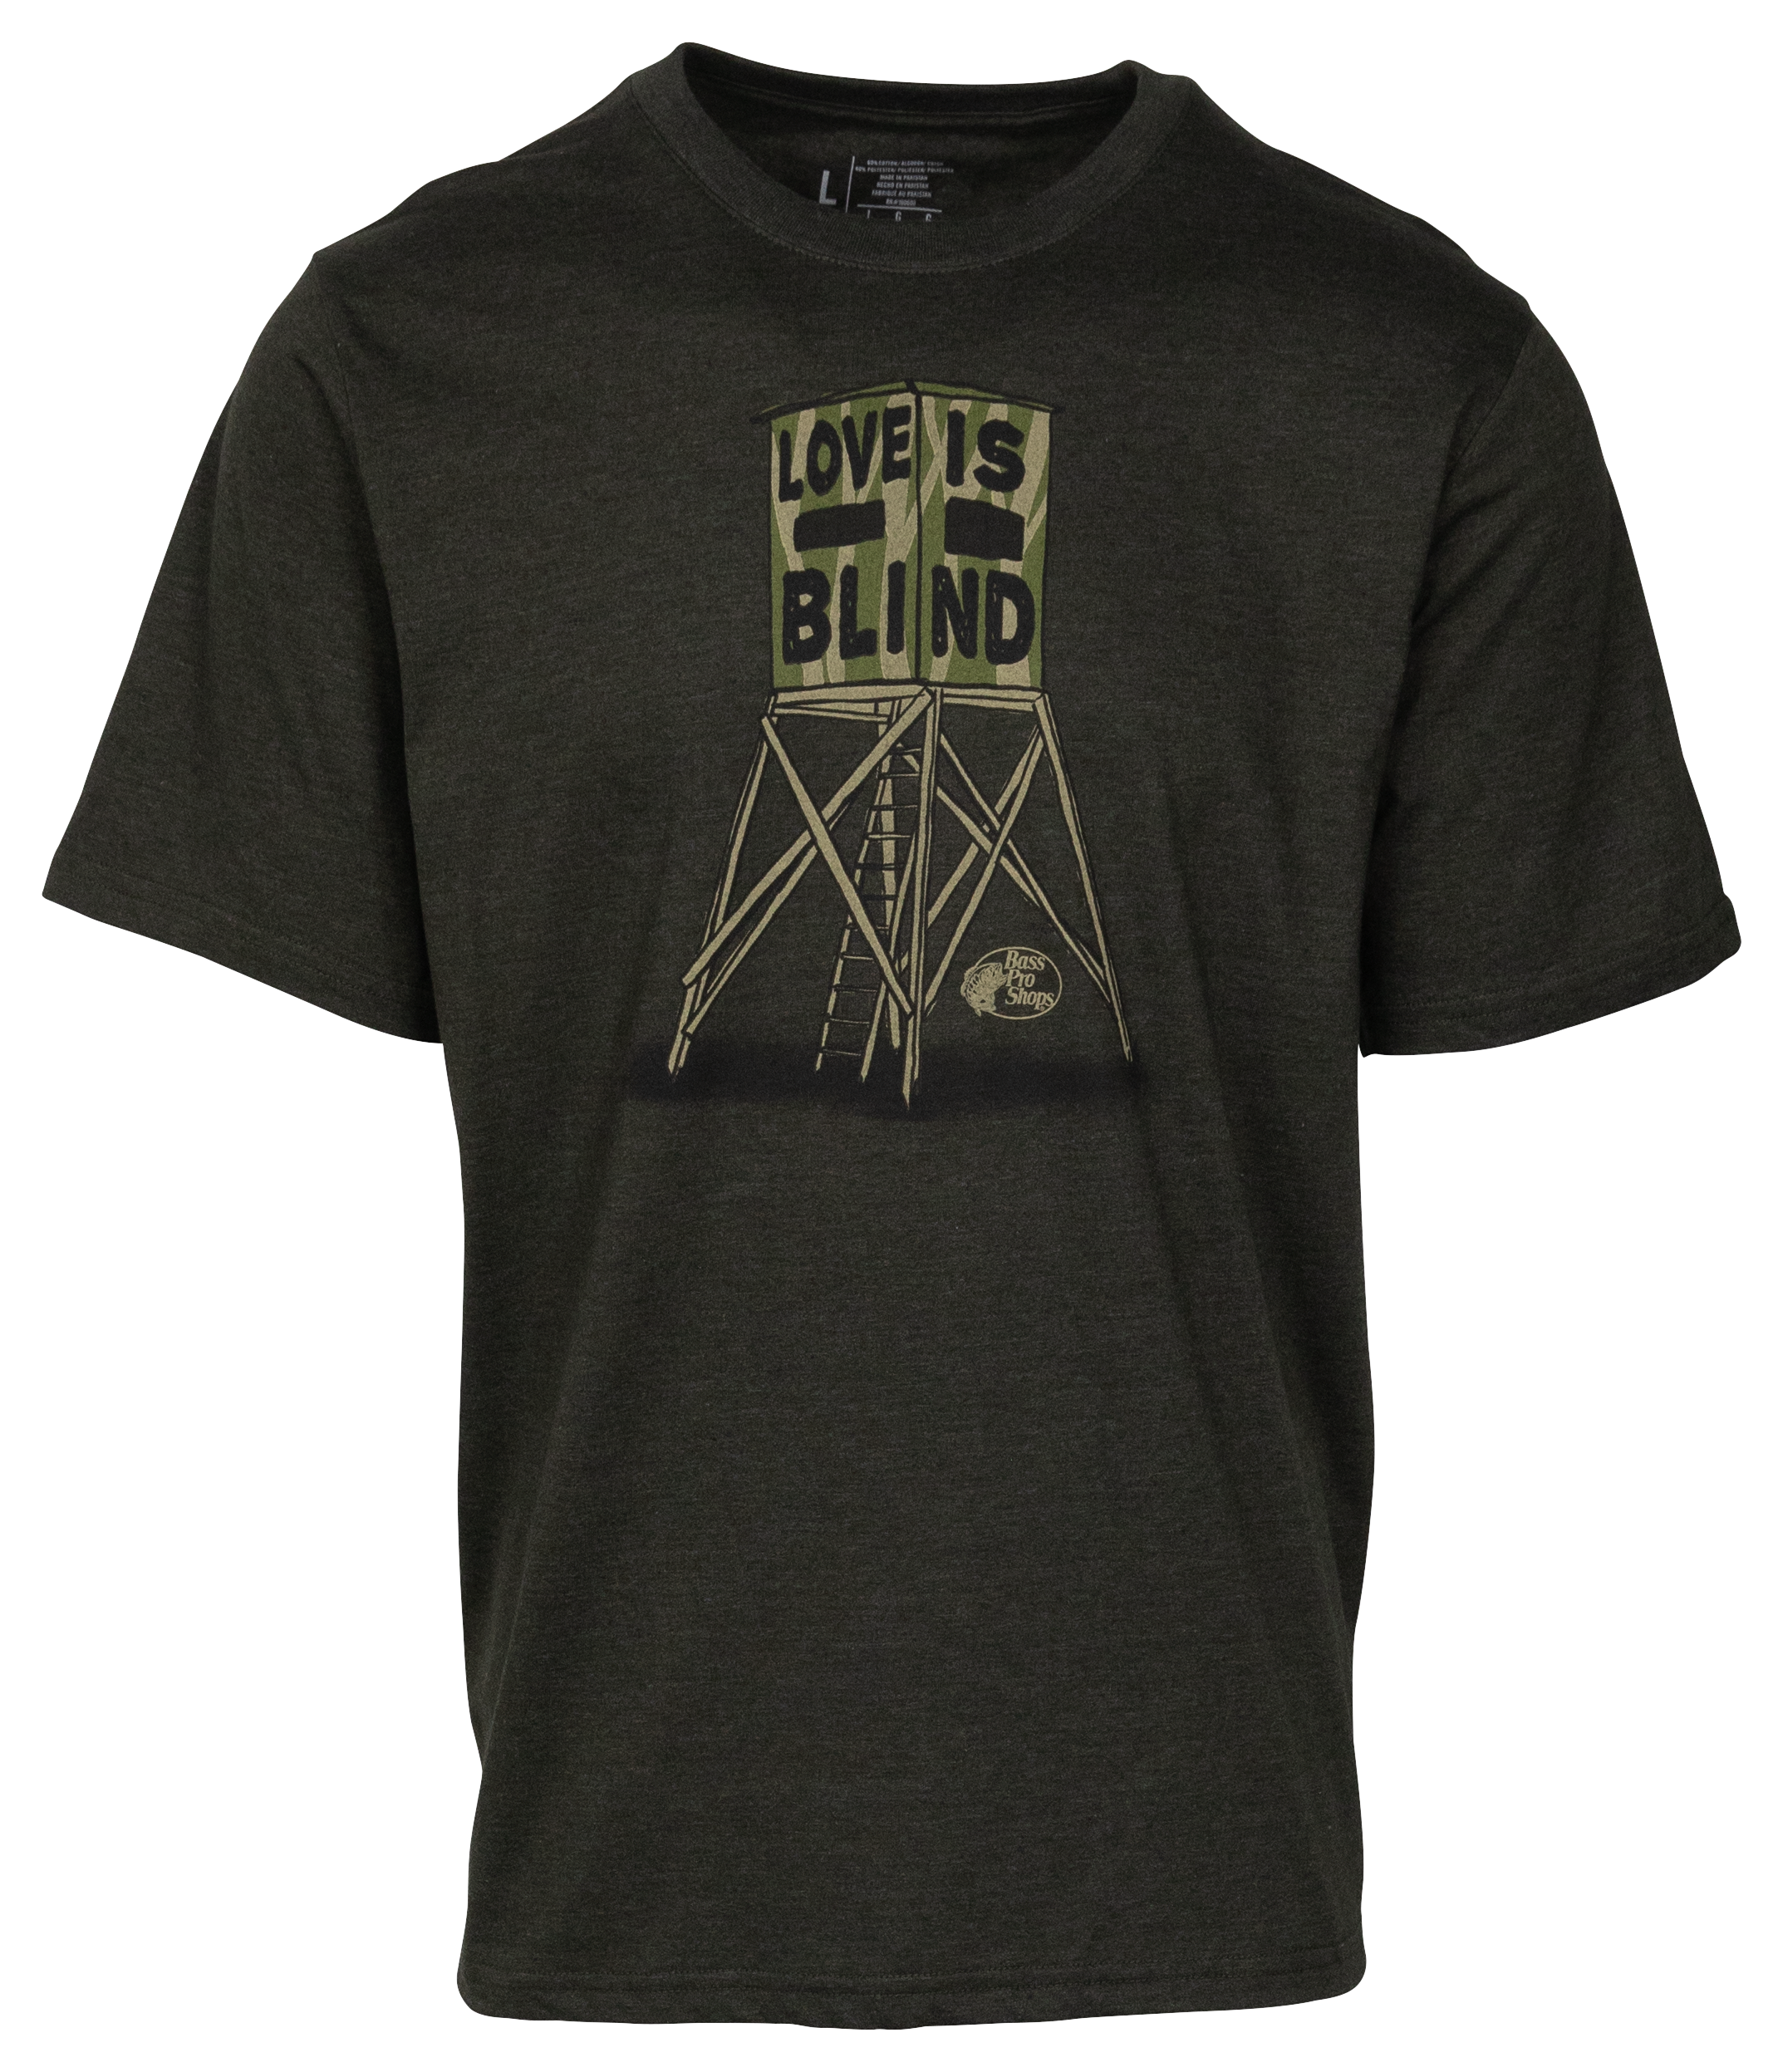 Bass Pro Shops Love Is Blind Short-Sleeve T-Shirt for Men - Olive Heather -2XL